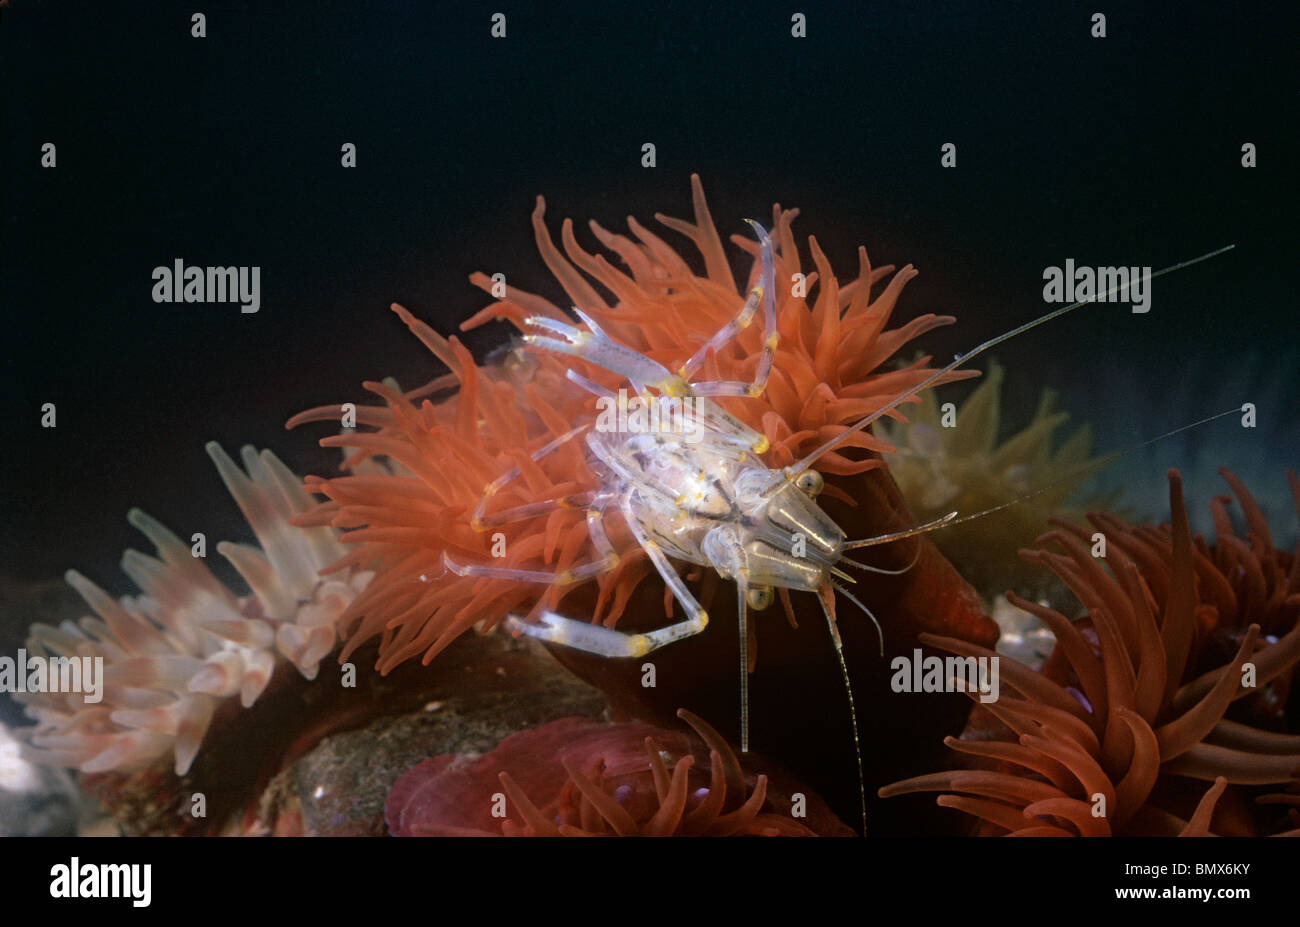 Beadlet anemone feeds on prawns in rock pools. Stock Photo